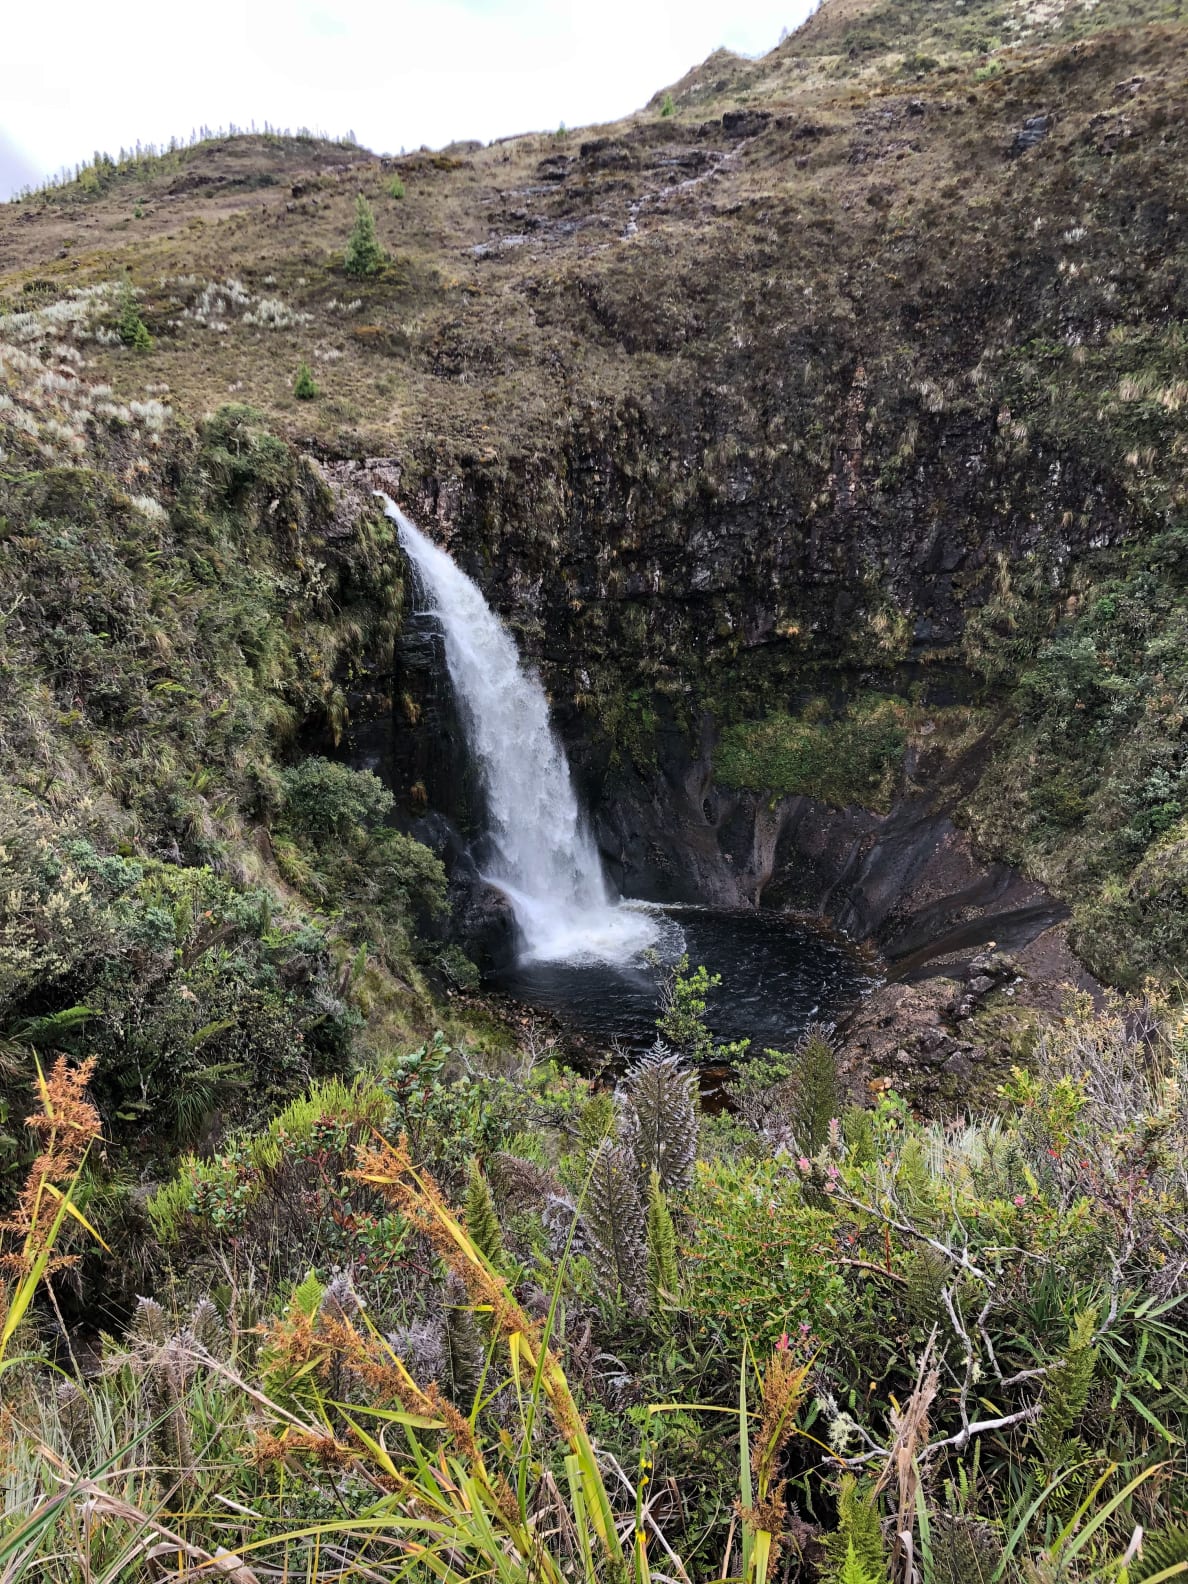 A photograph of a waterfall along the Inca trail near Ona.